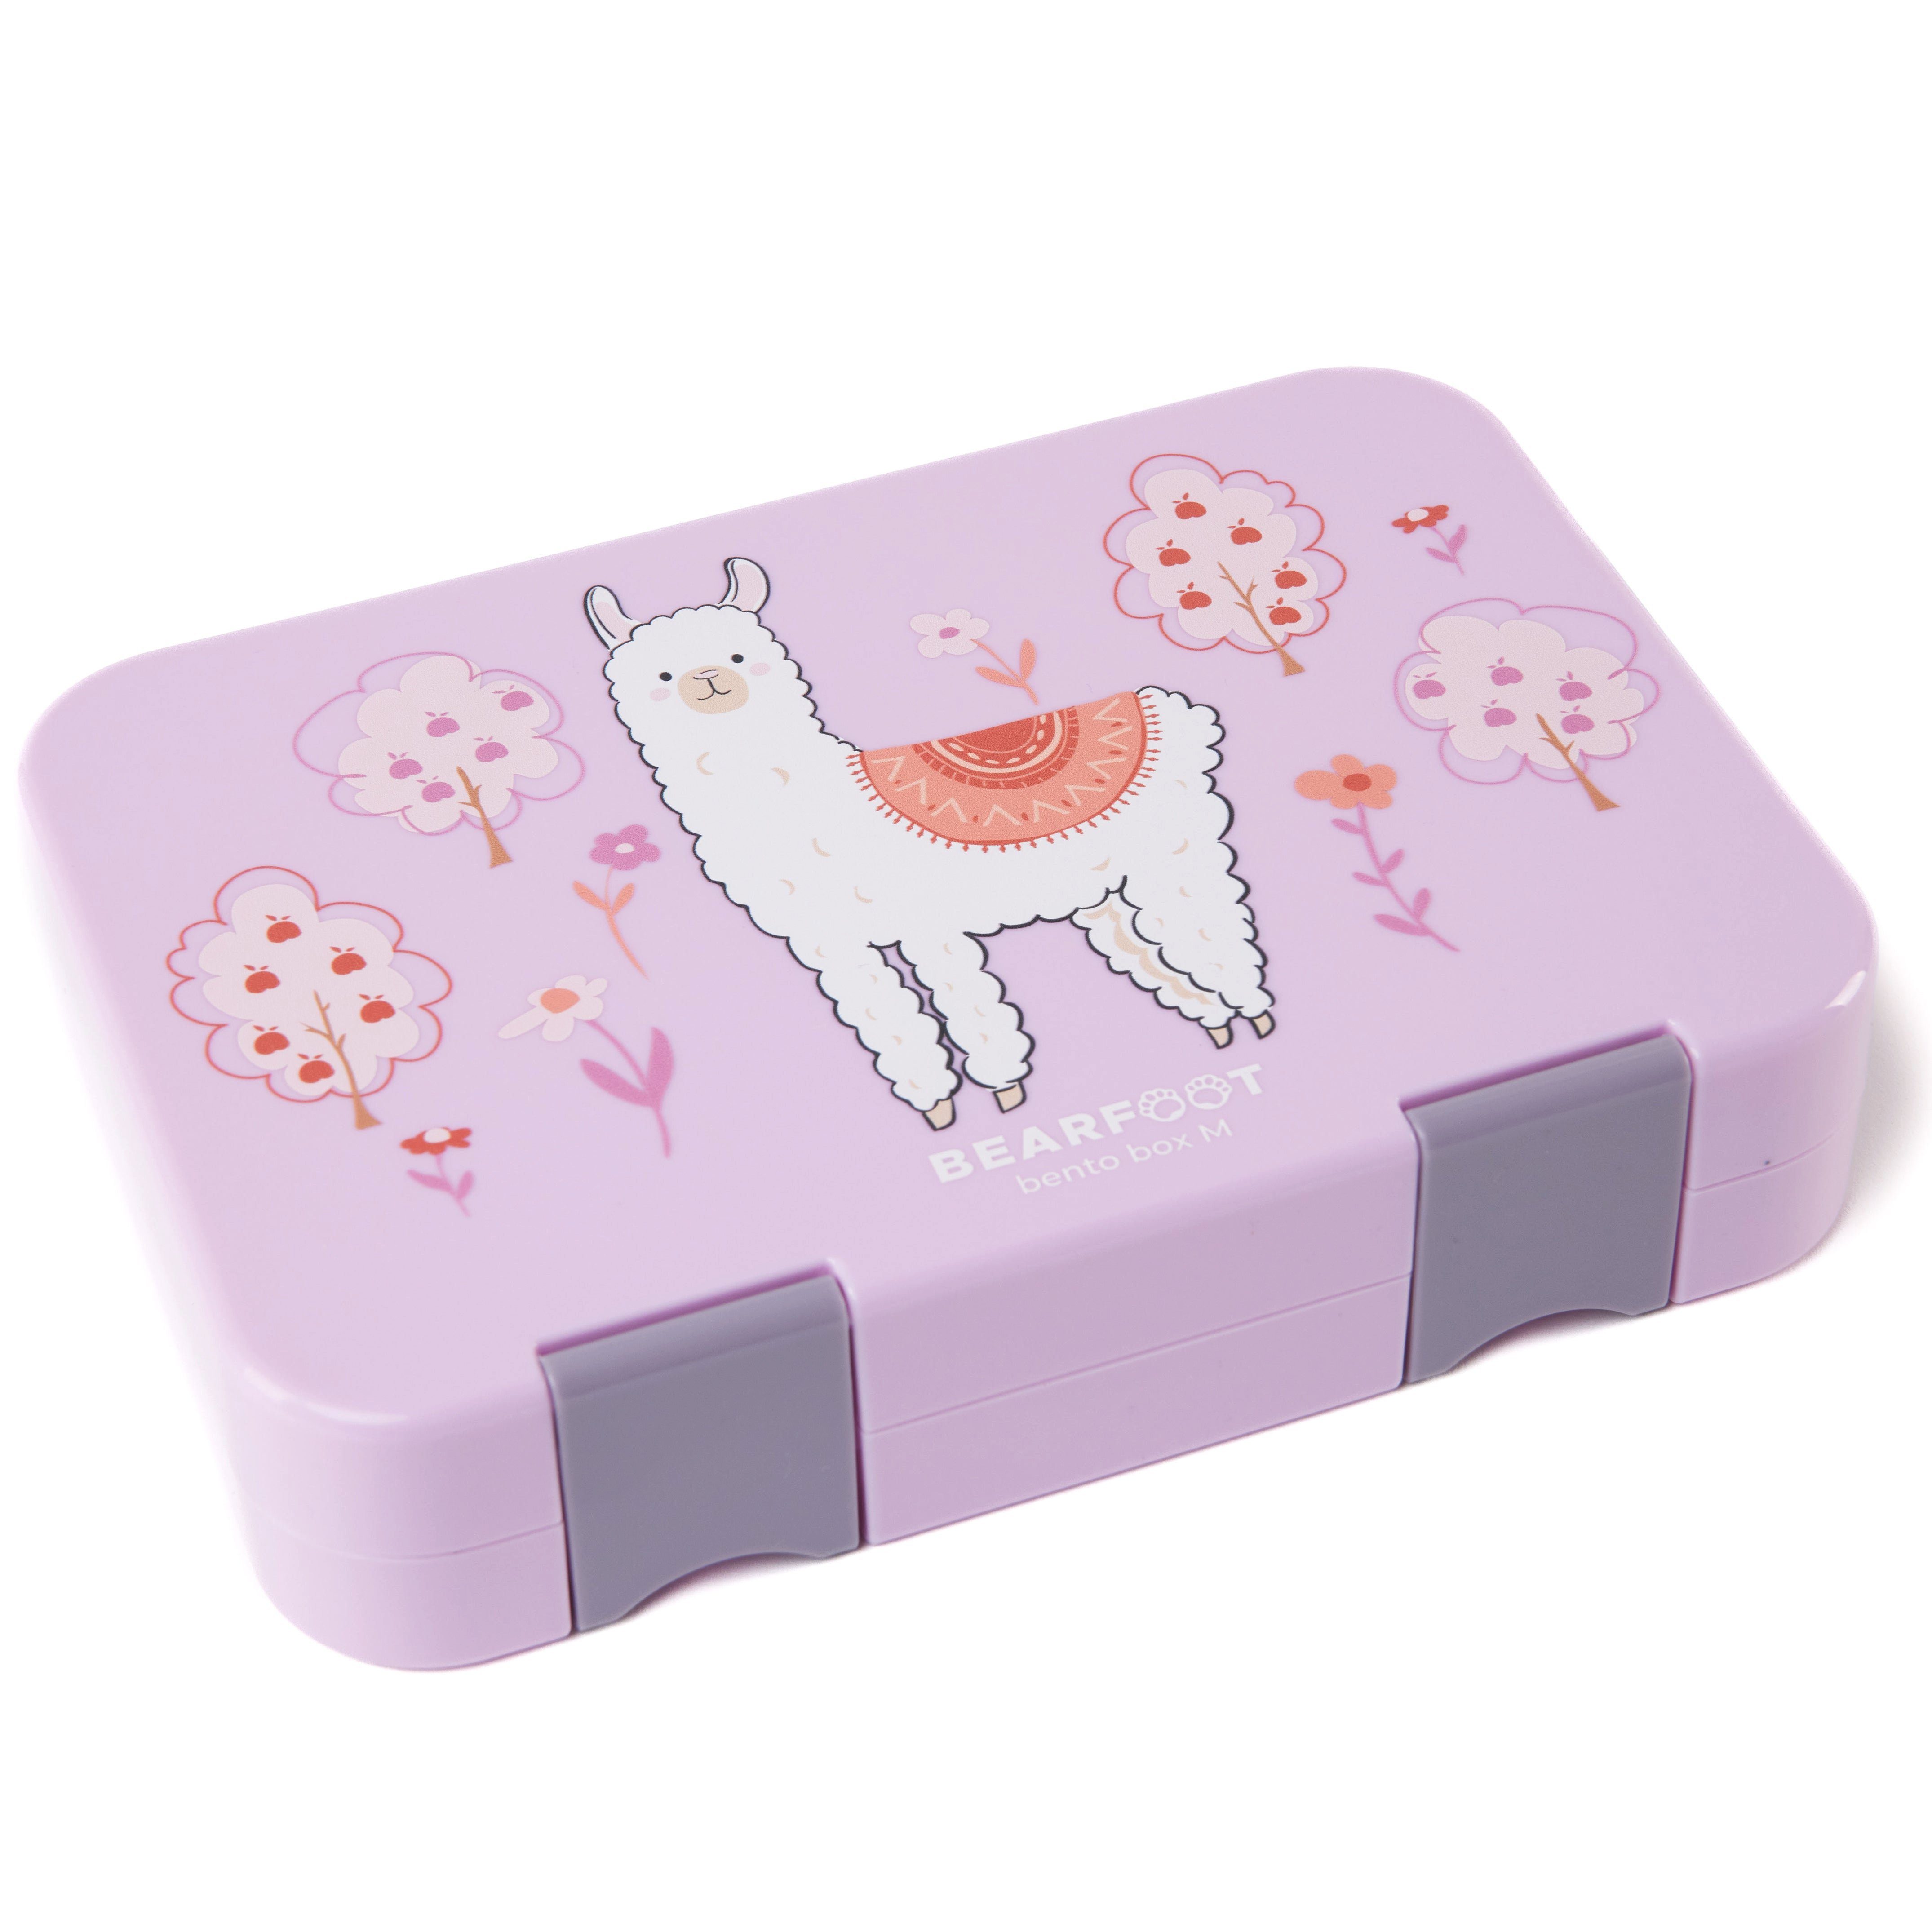 BEARFOOT Lunchbox Brotdose Kinder mit Fächern, Lunchbox, Bento box - Lama Lila, handgezeichnete Designs, modular Lama-lila